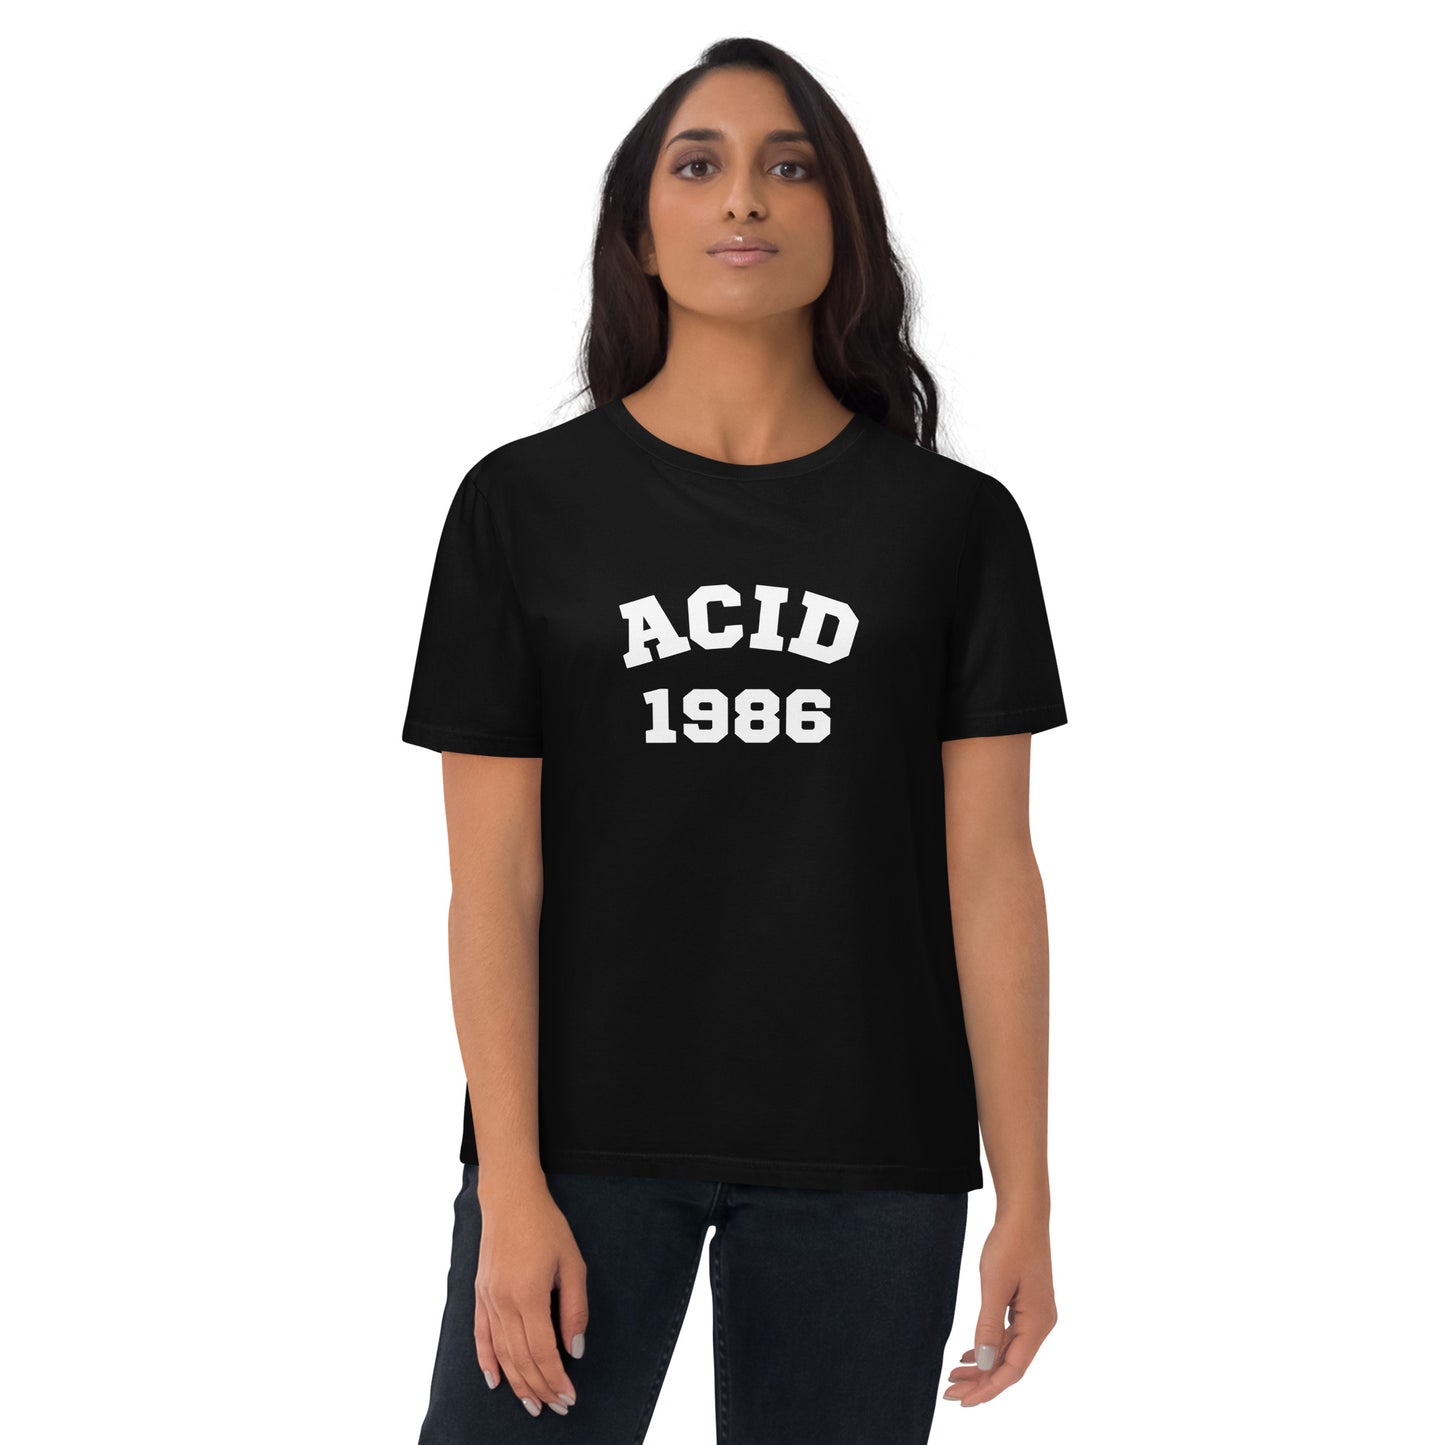 Acid 1986 - Unisex organic cotton t-shirt